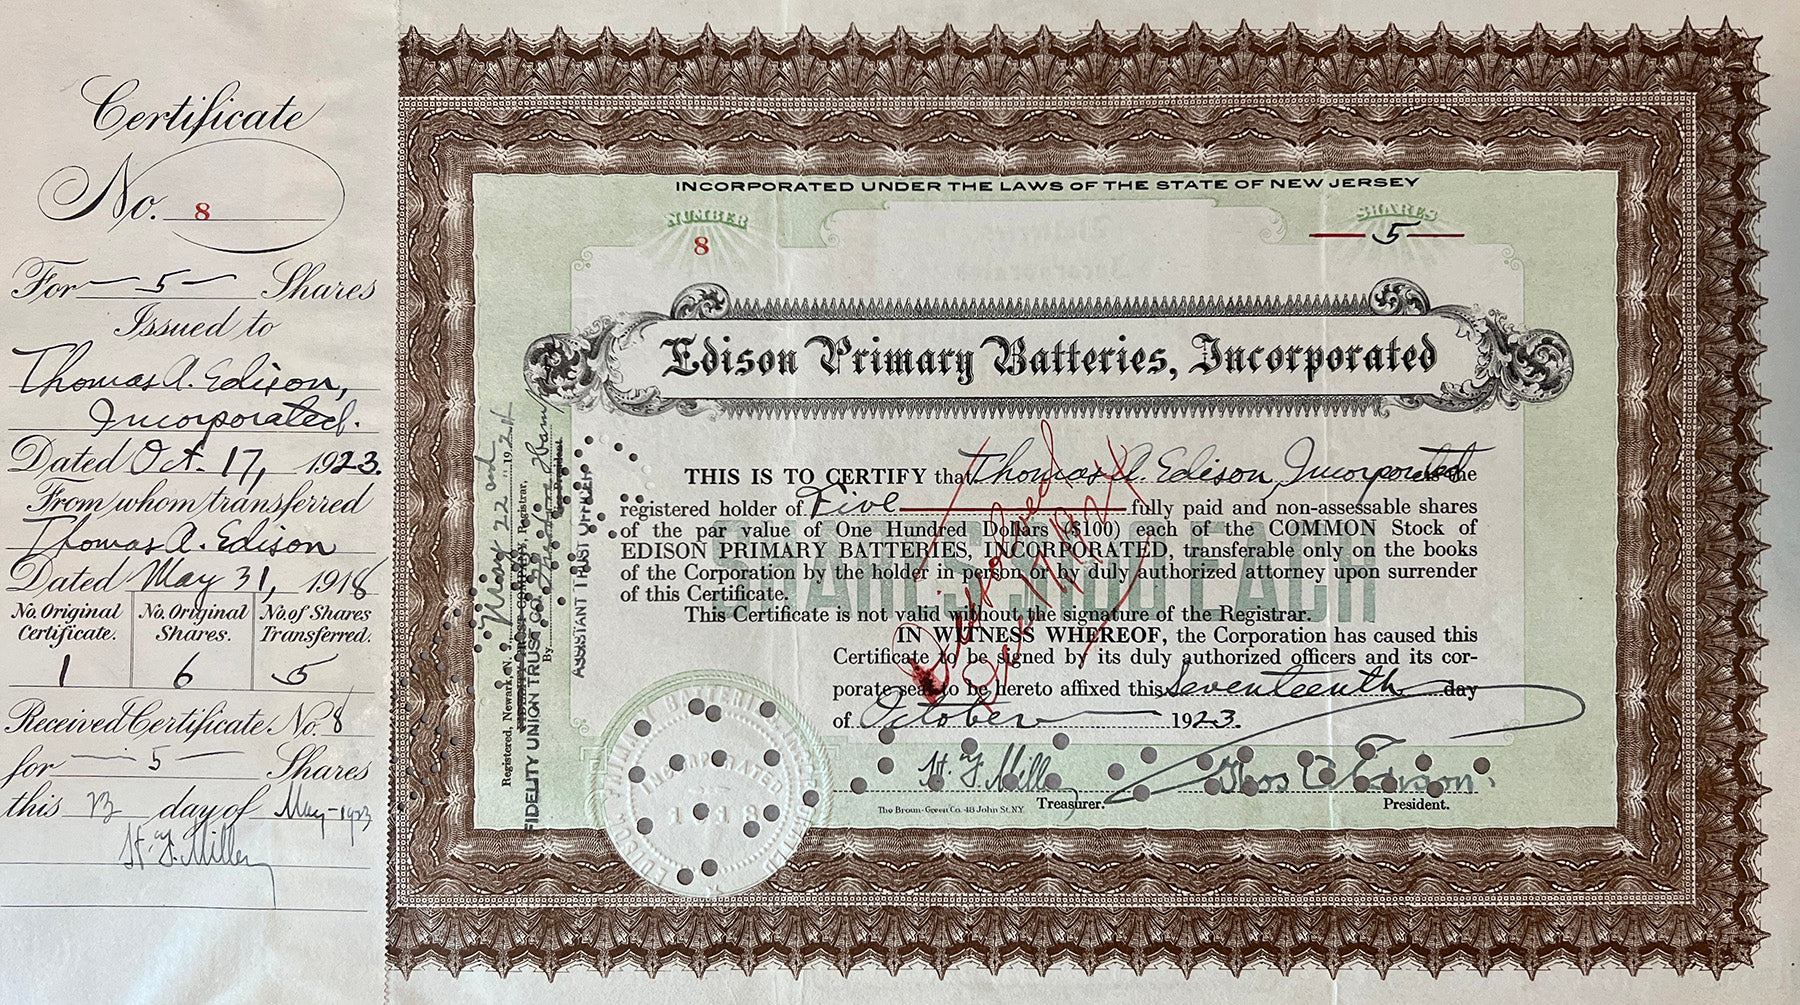 Thomas Edison Battery Company Signed Stock Certificate, 1923. Auto JSA